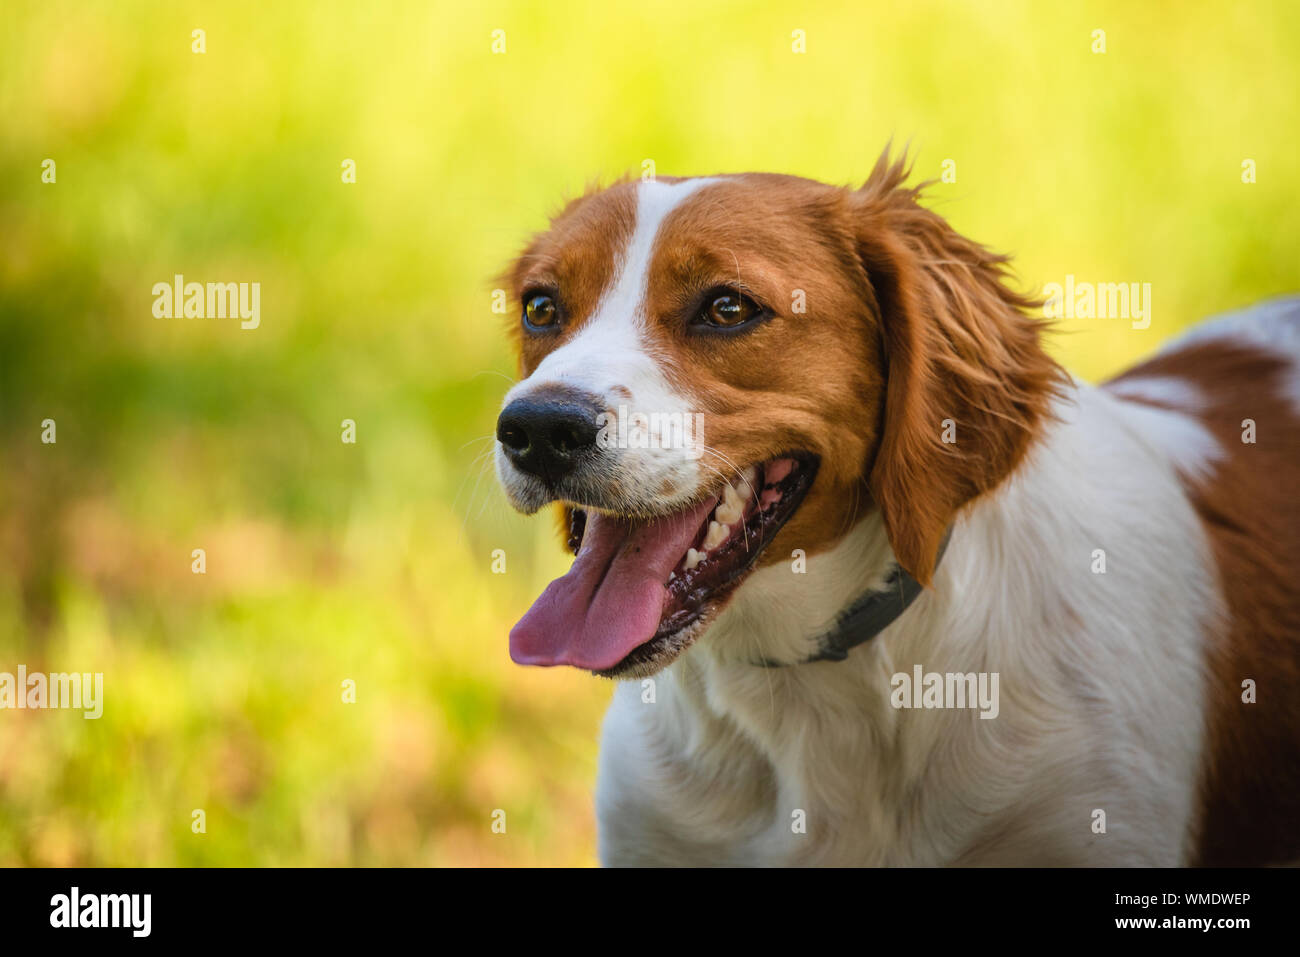 Dog breed Breton Spaniel Stock Photo by ©DevidDO 298199052